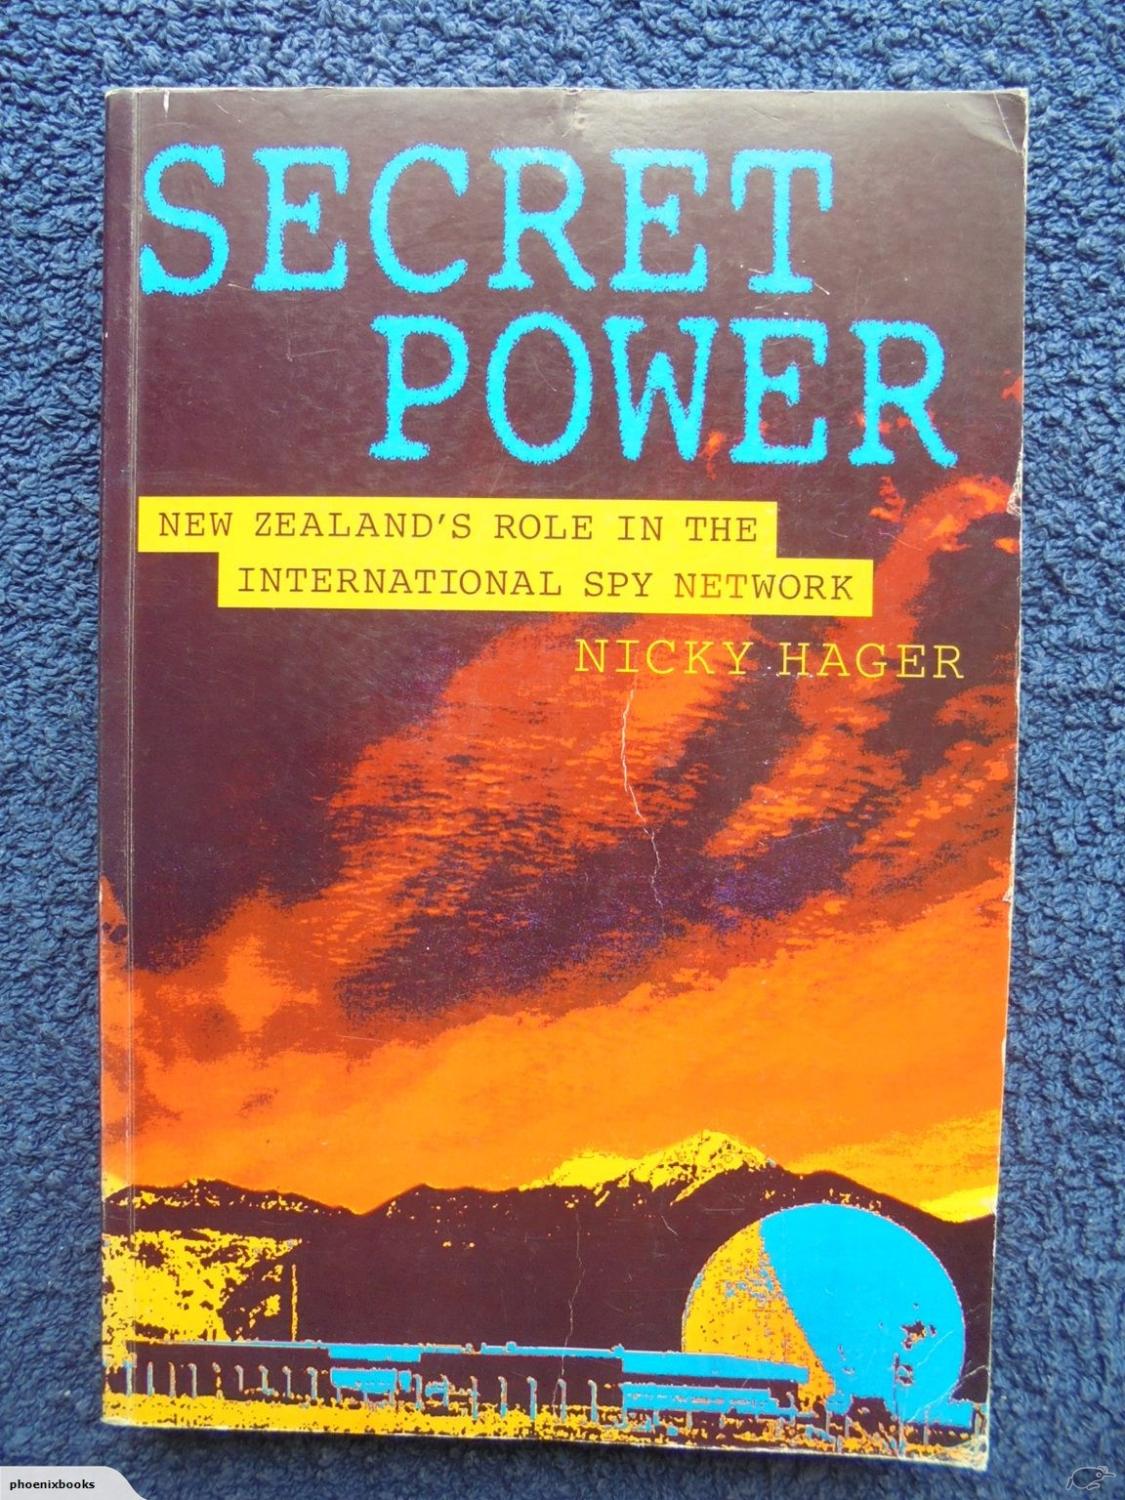 Secret power - Nicky Hager